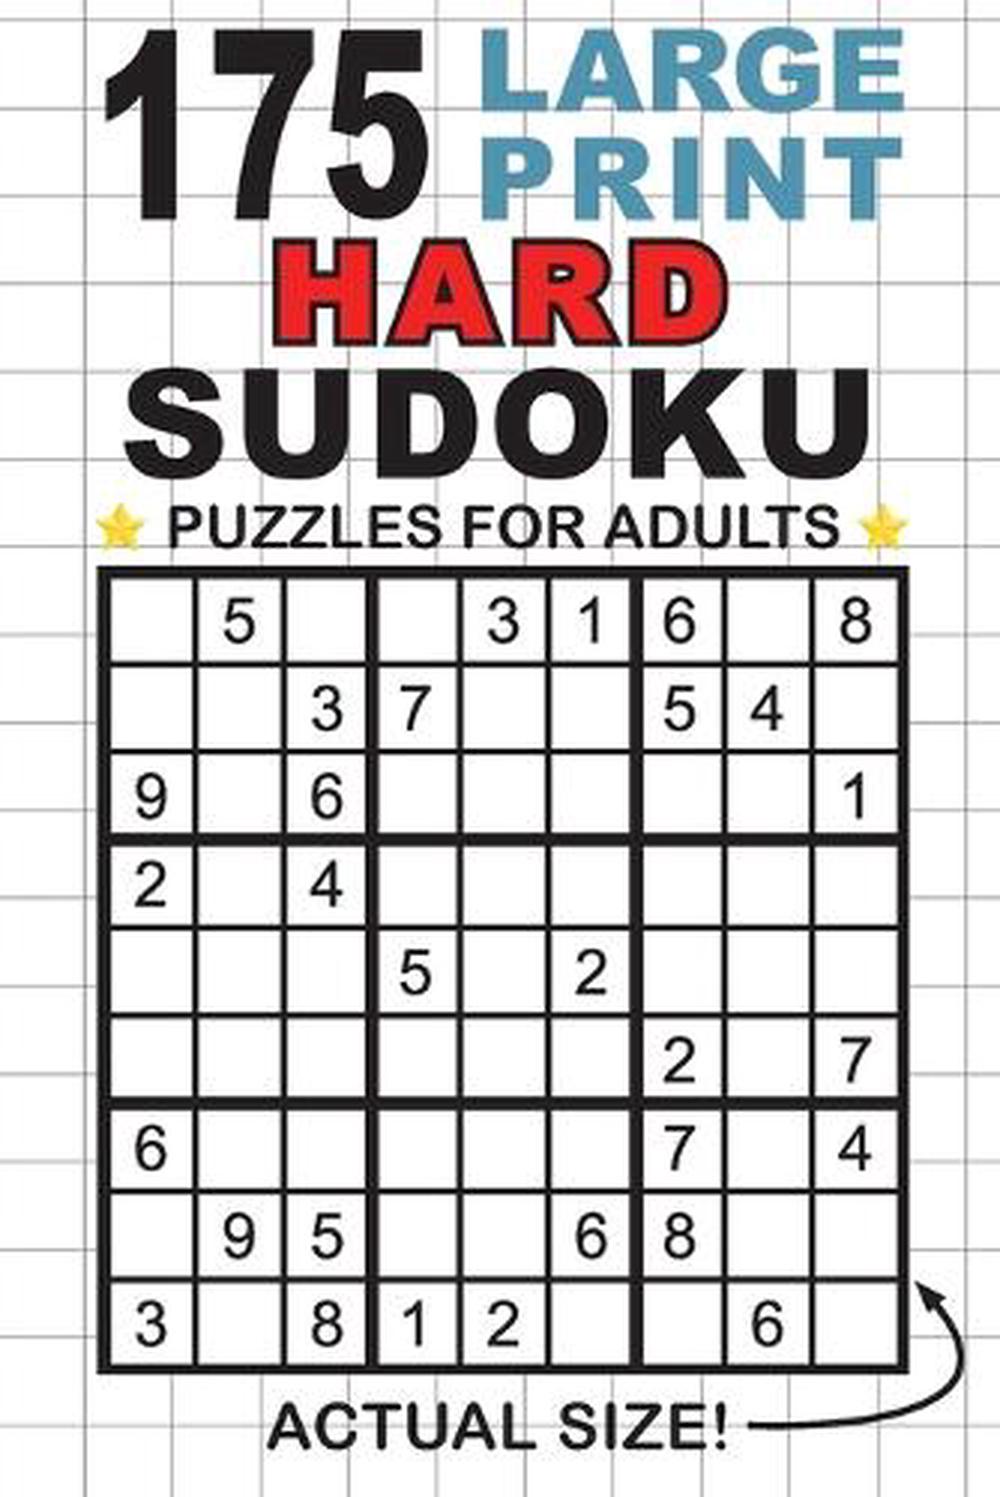 sudoku online